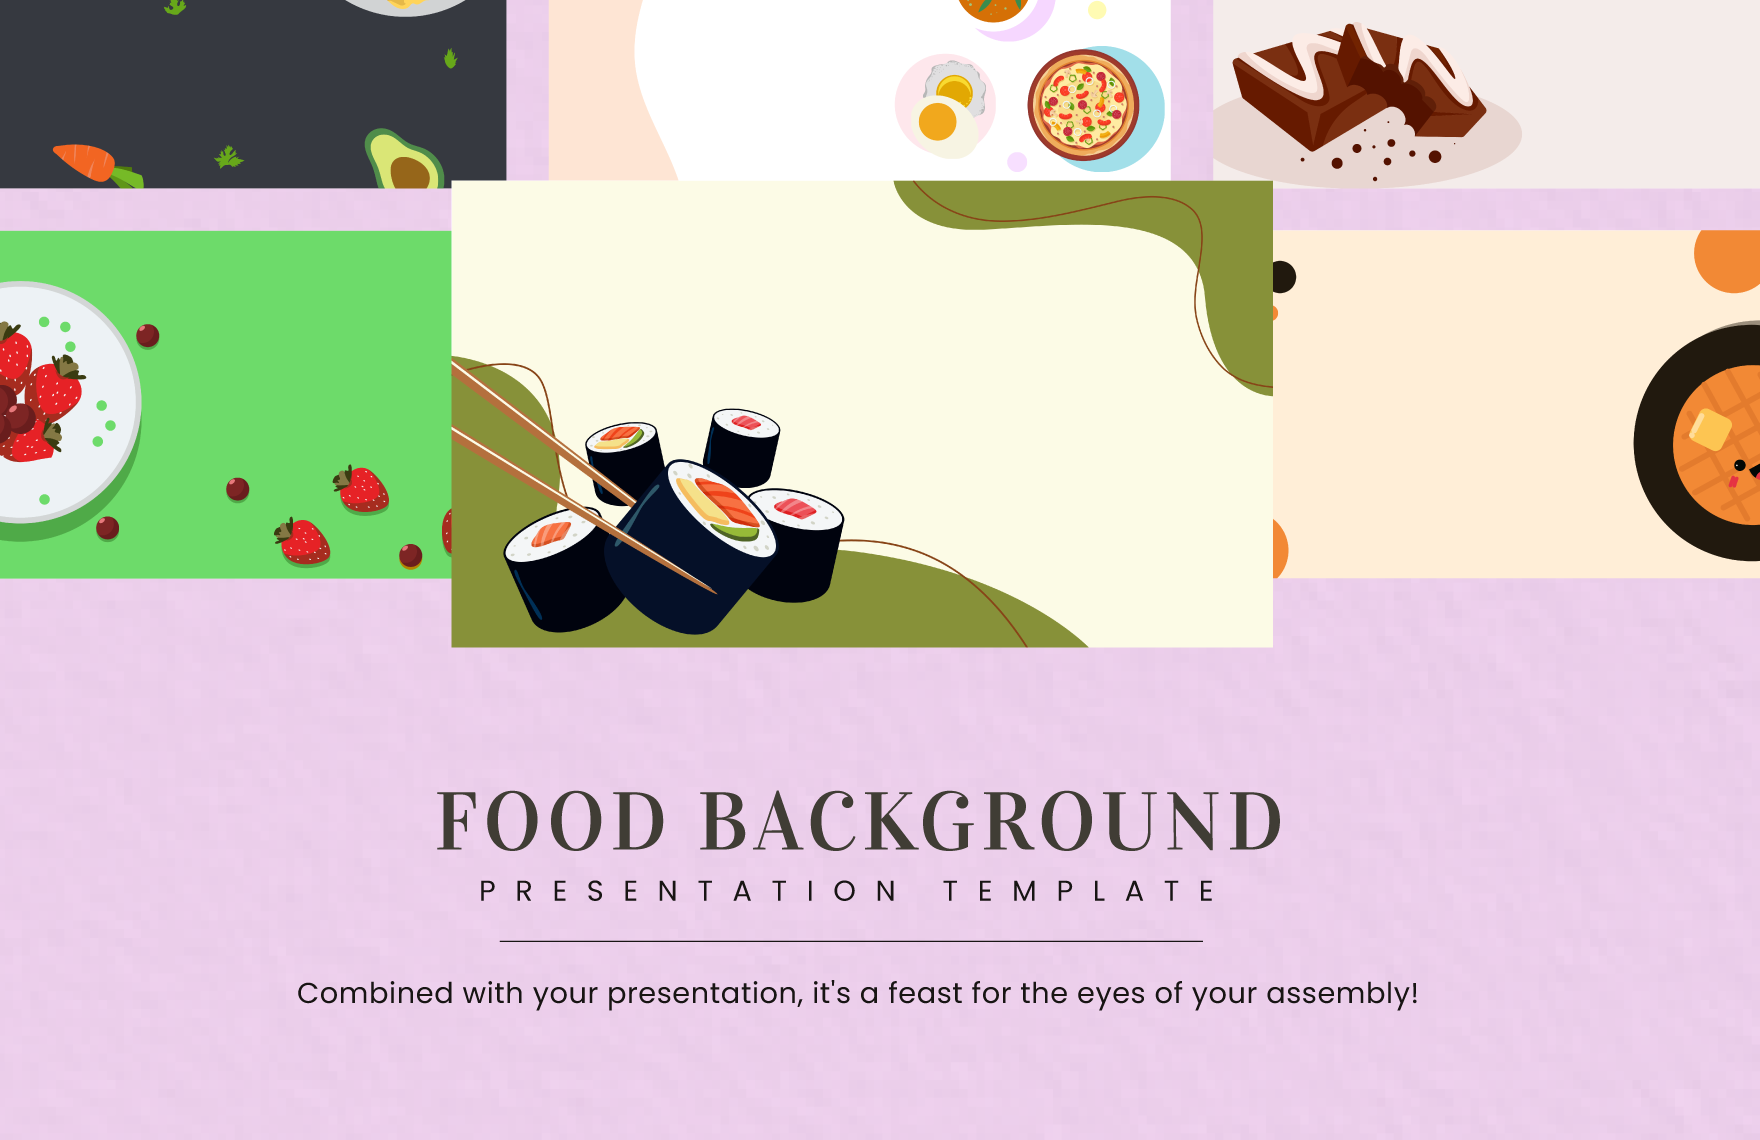 Food Background Presentation Template